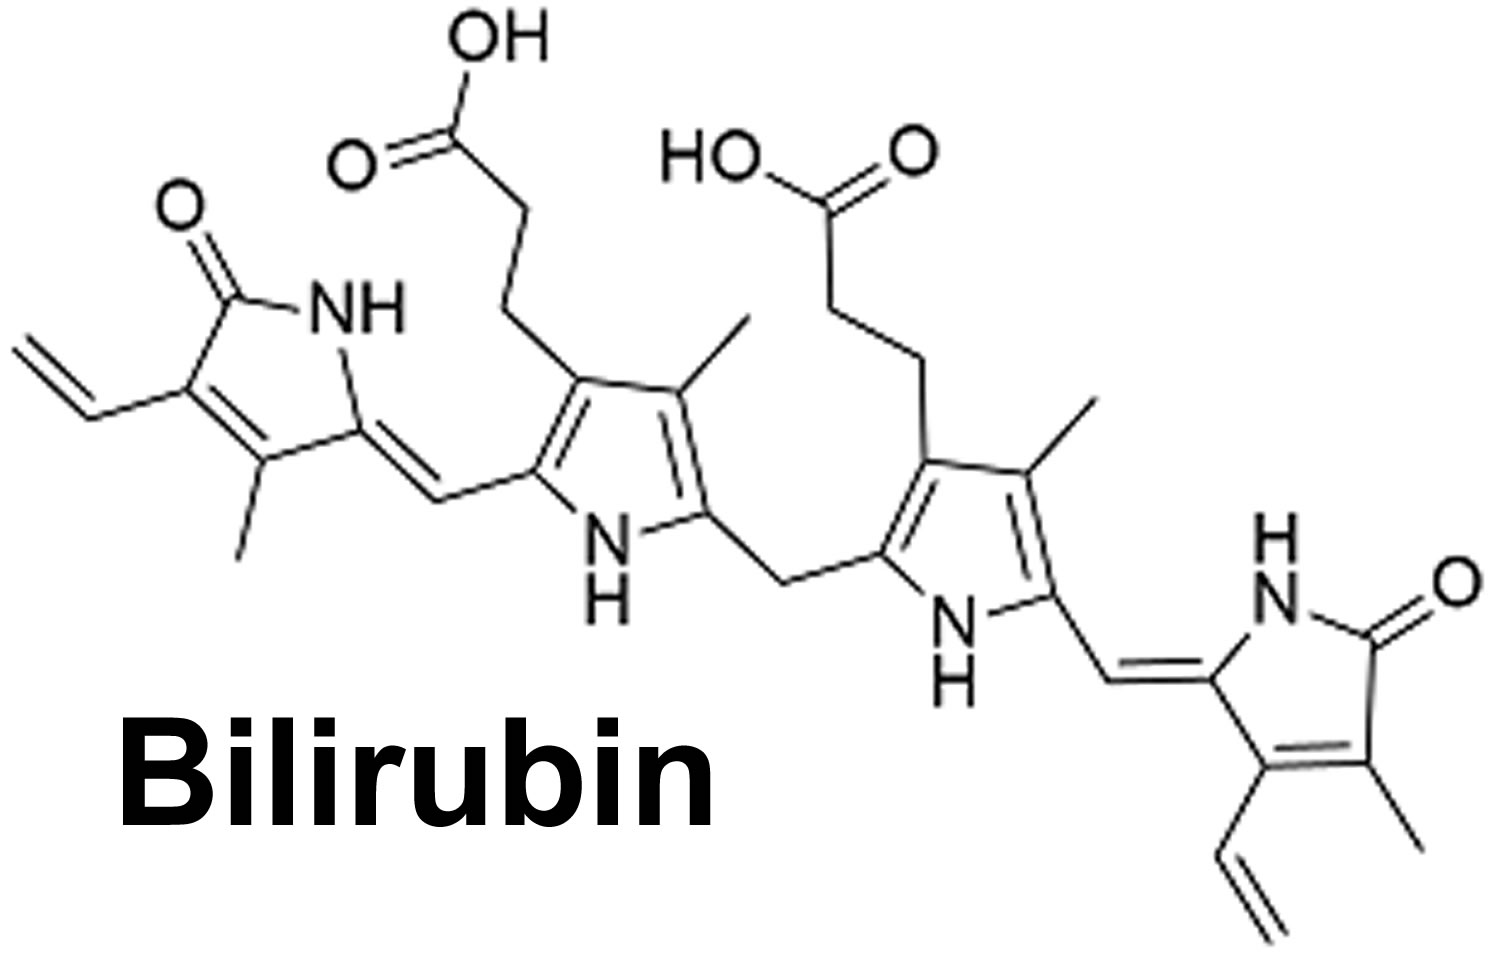 Bilirubin meaning